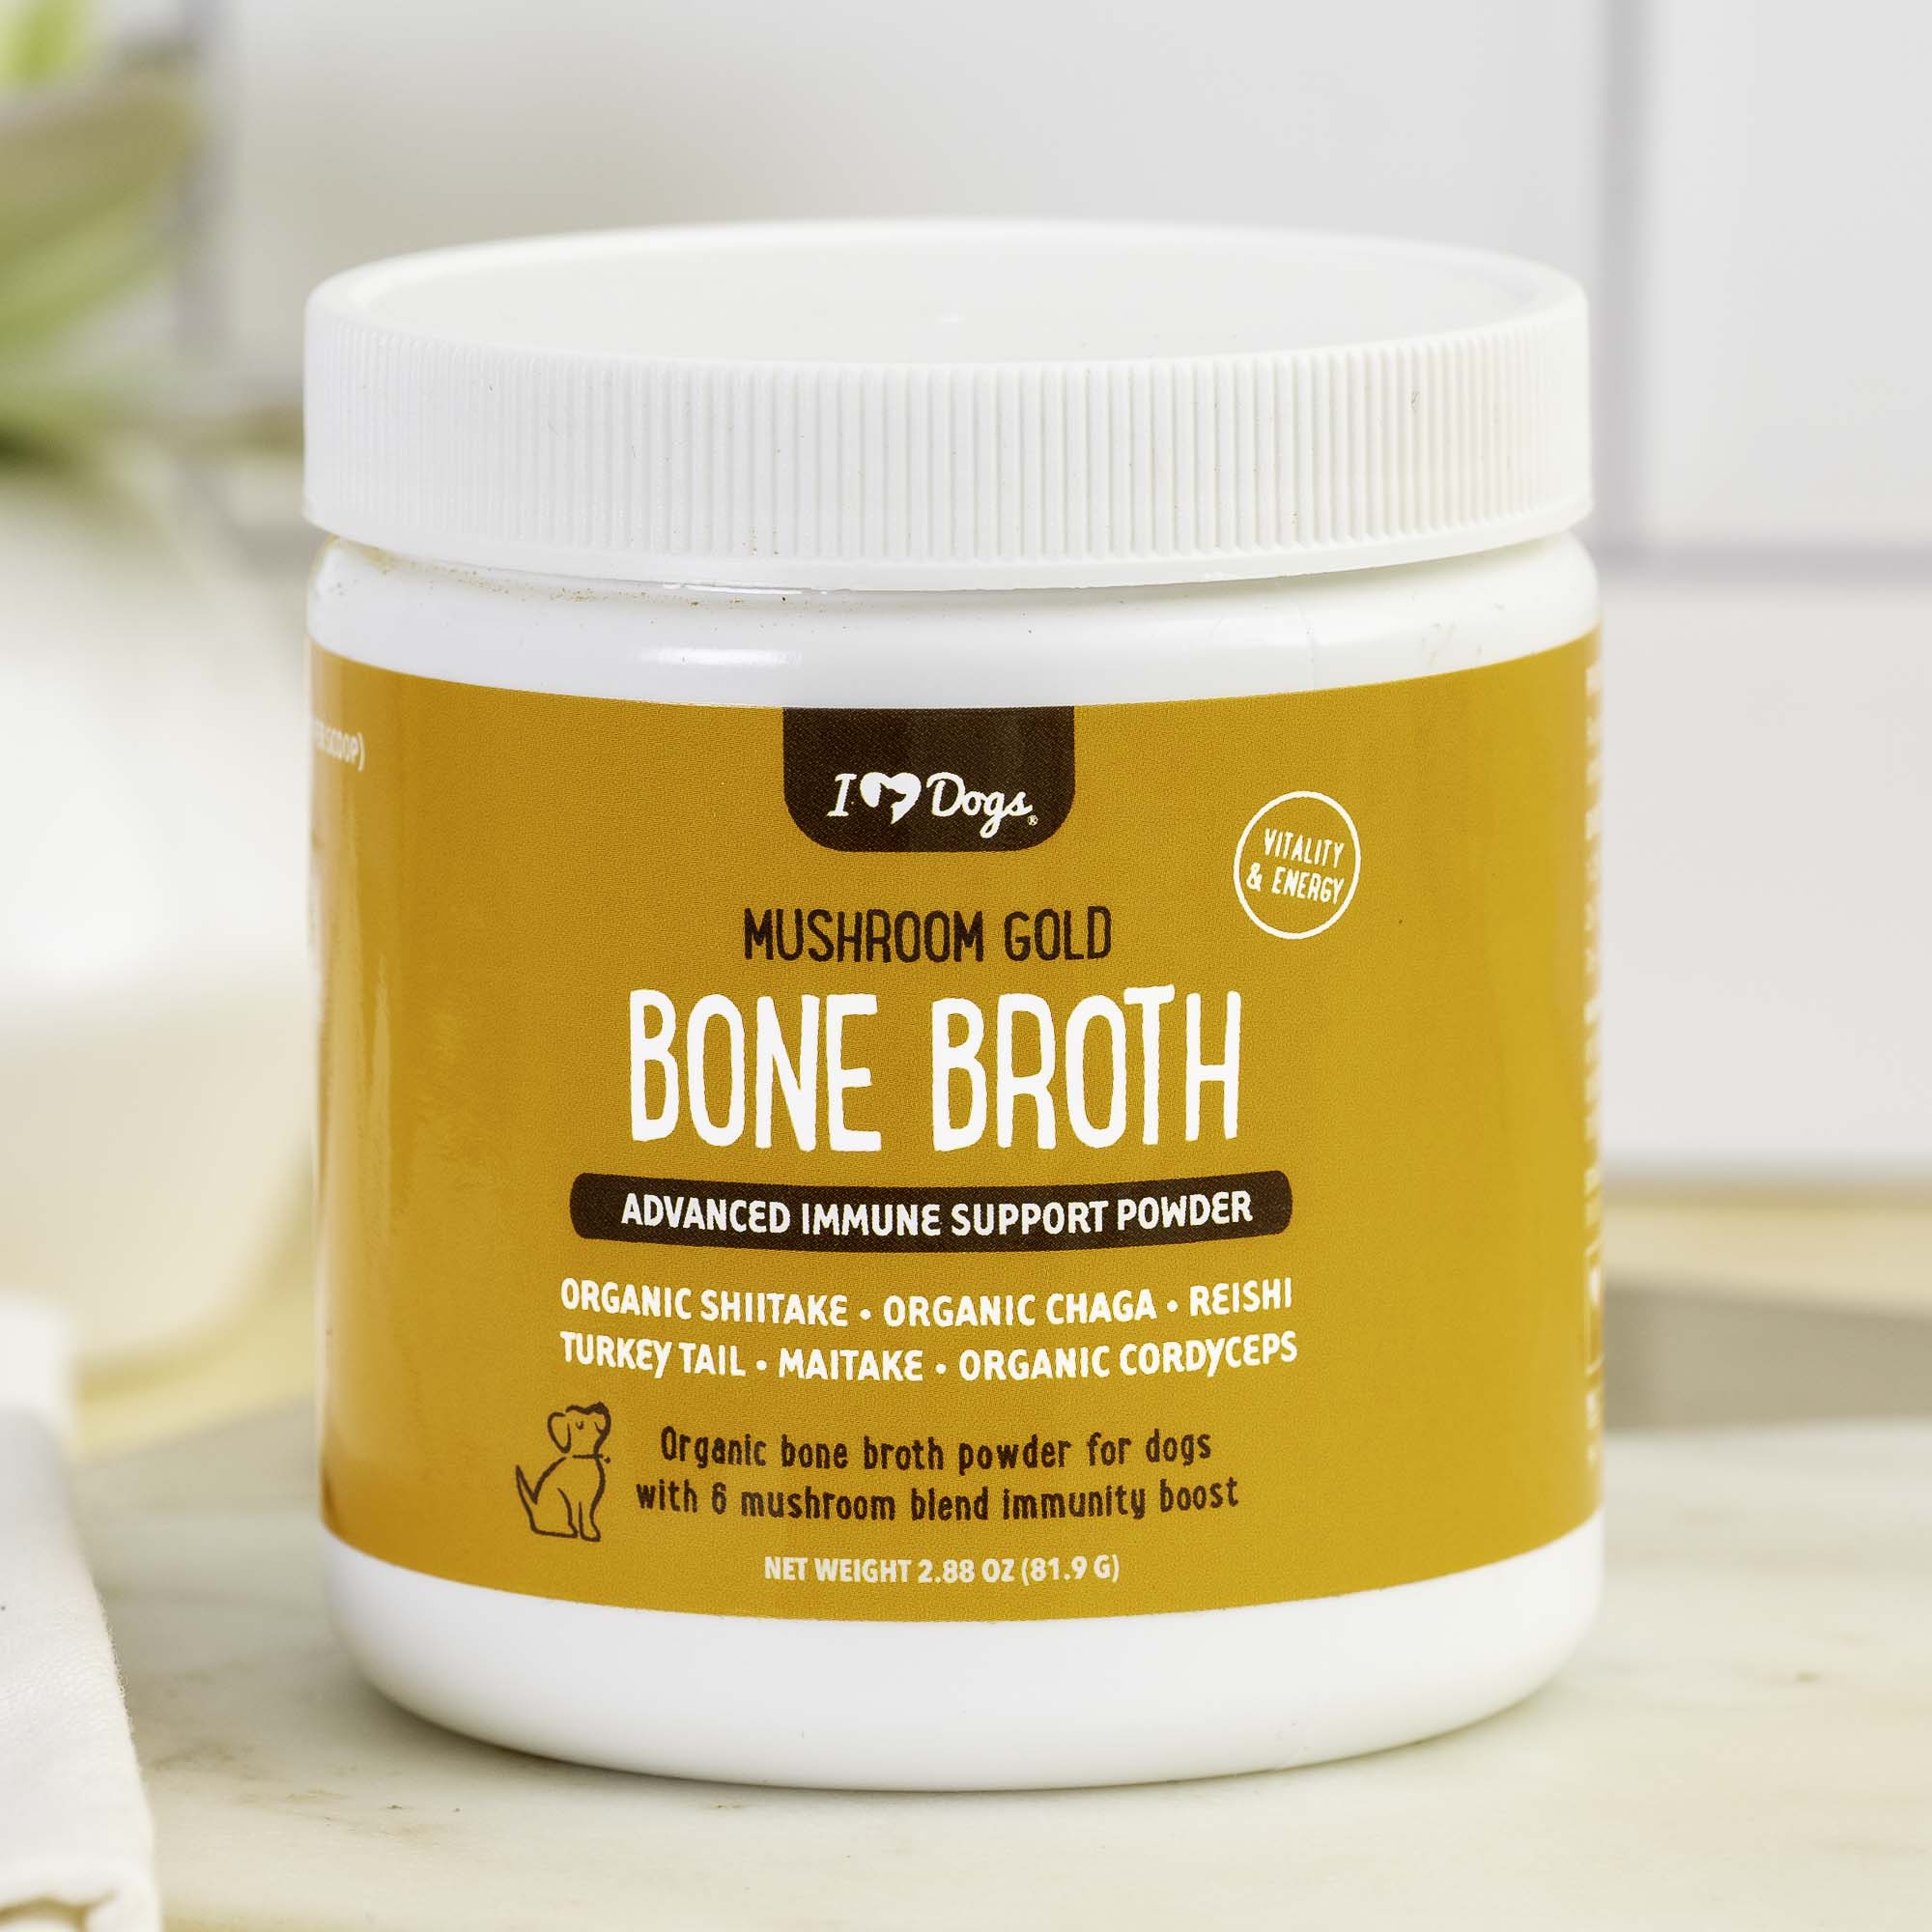 Bone Broth For Dogs Immune Support Powder – PLUS Mushroom Gold with Organic Shiitake, Turkey Tail, Reishi